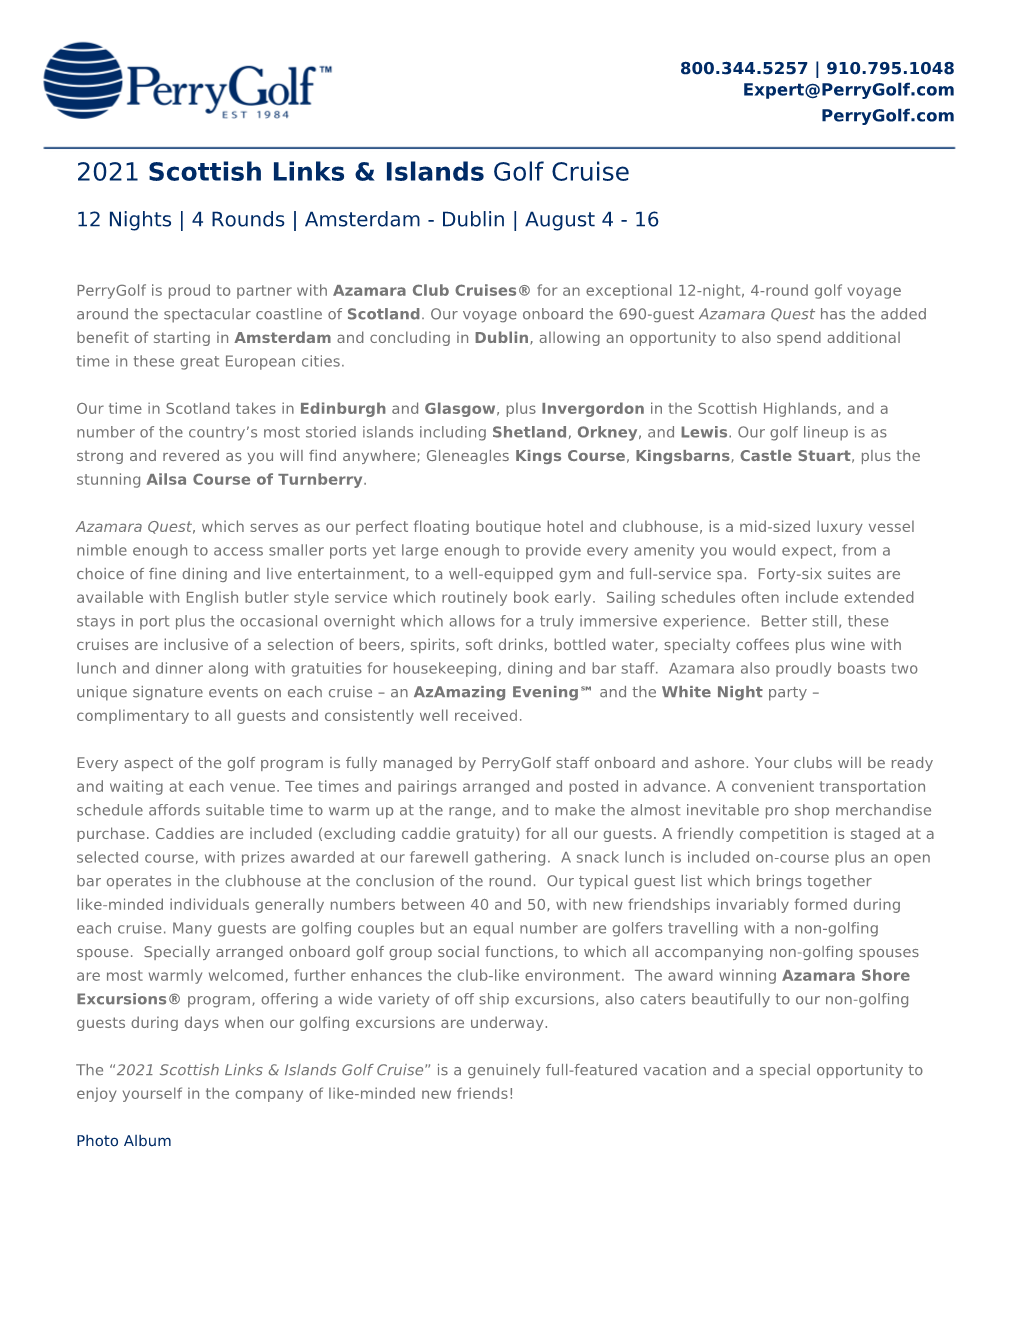 2021 Scottish Links & Islands Golf Cruise